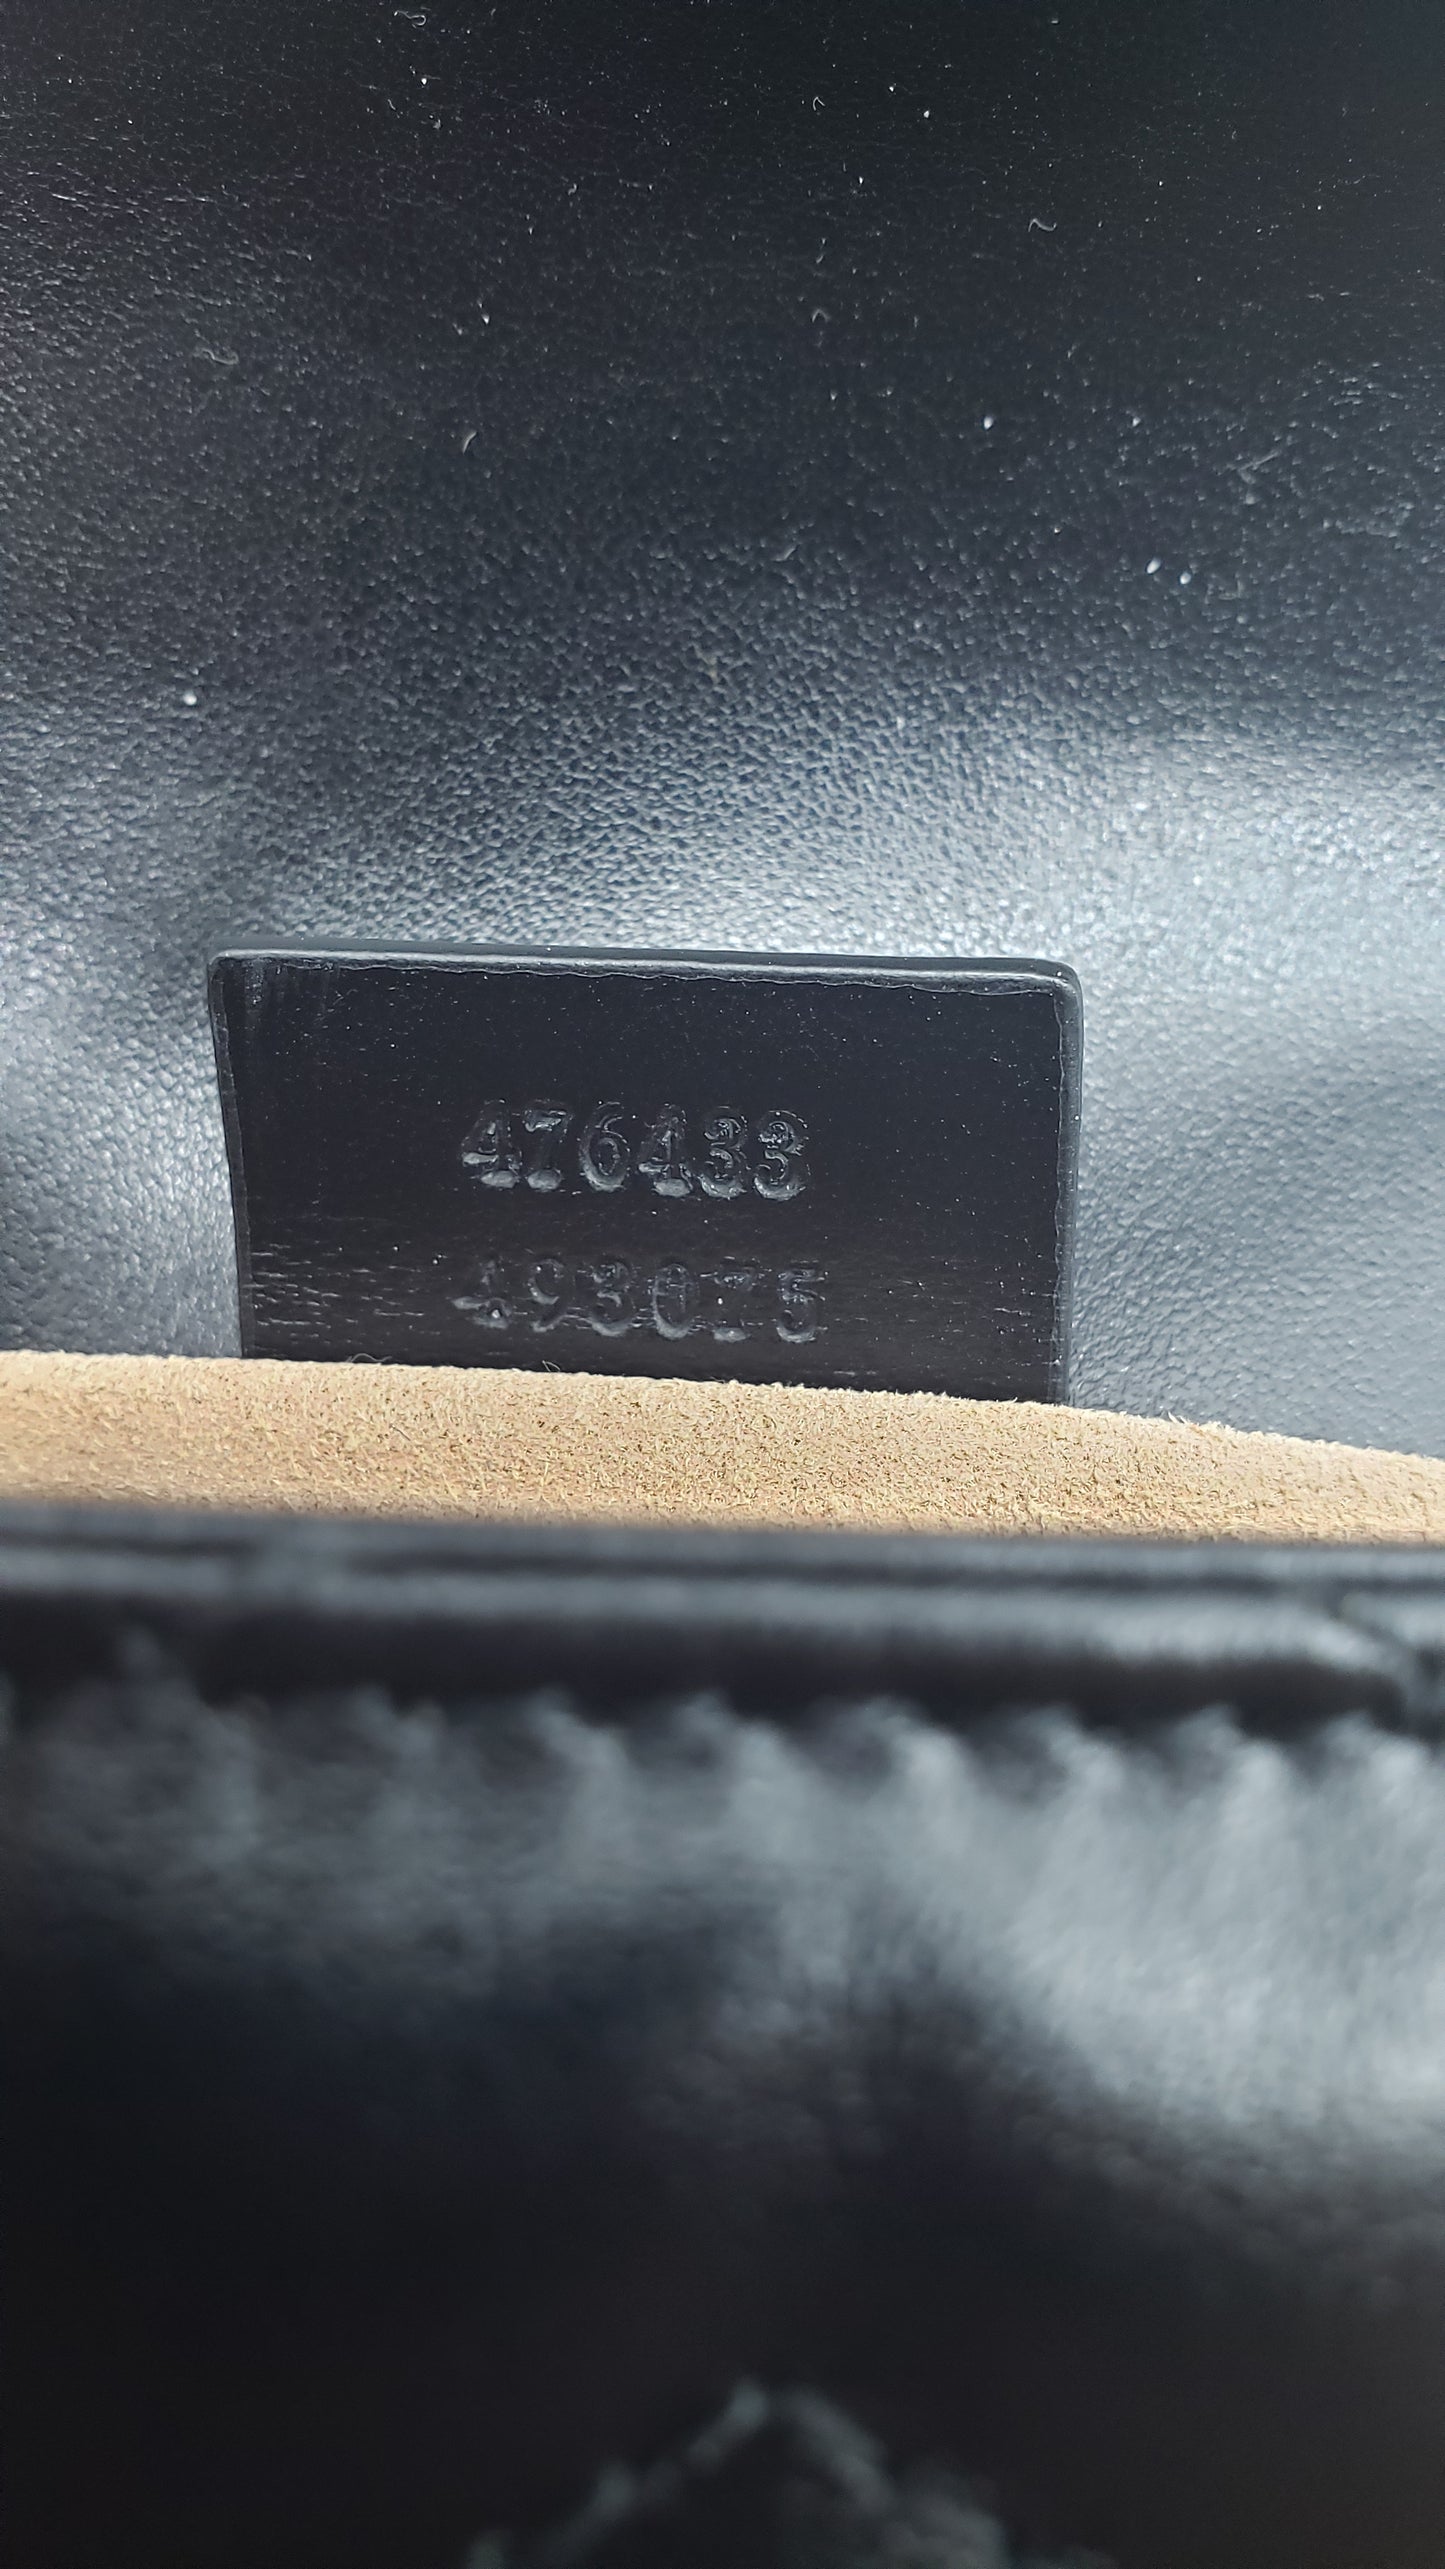 Gucci Black Leather Super Mini Marmont Shoulder Bag